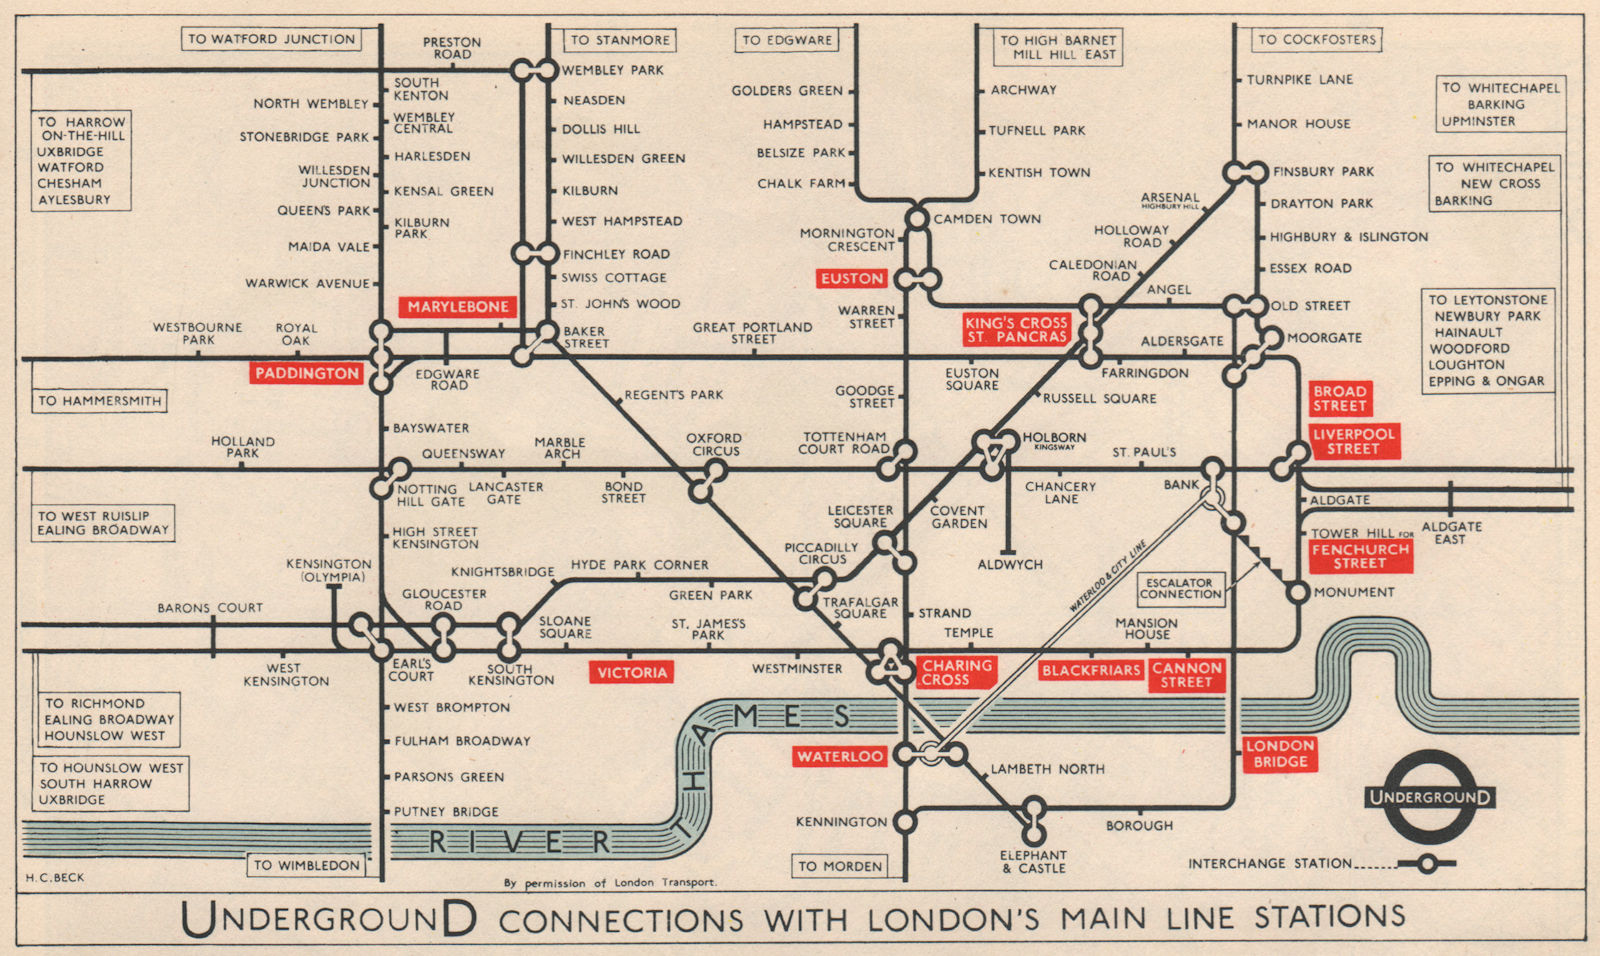 LONDON UNDERGROUND. Main Line rail connections. Pre-Victoria Line. BECK 1963 map